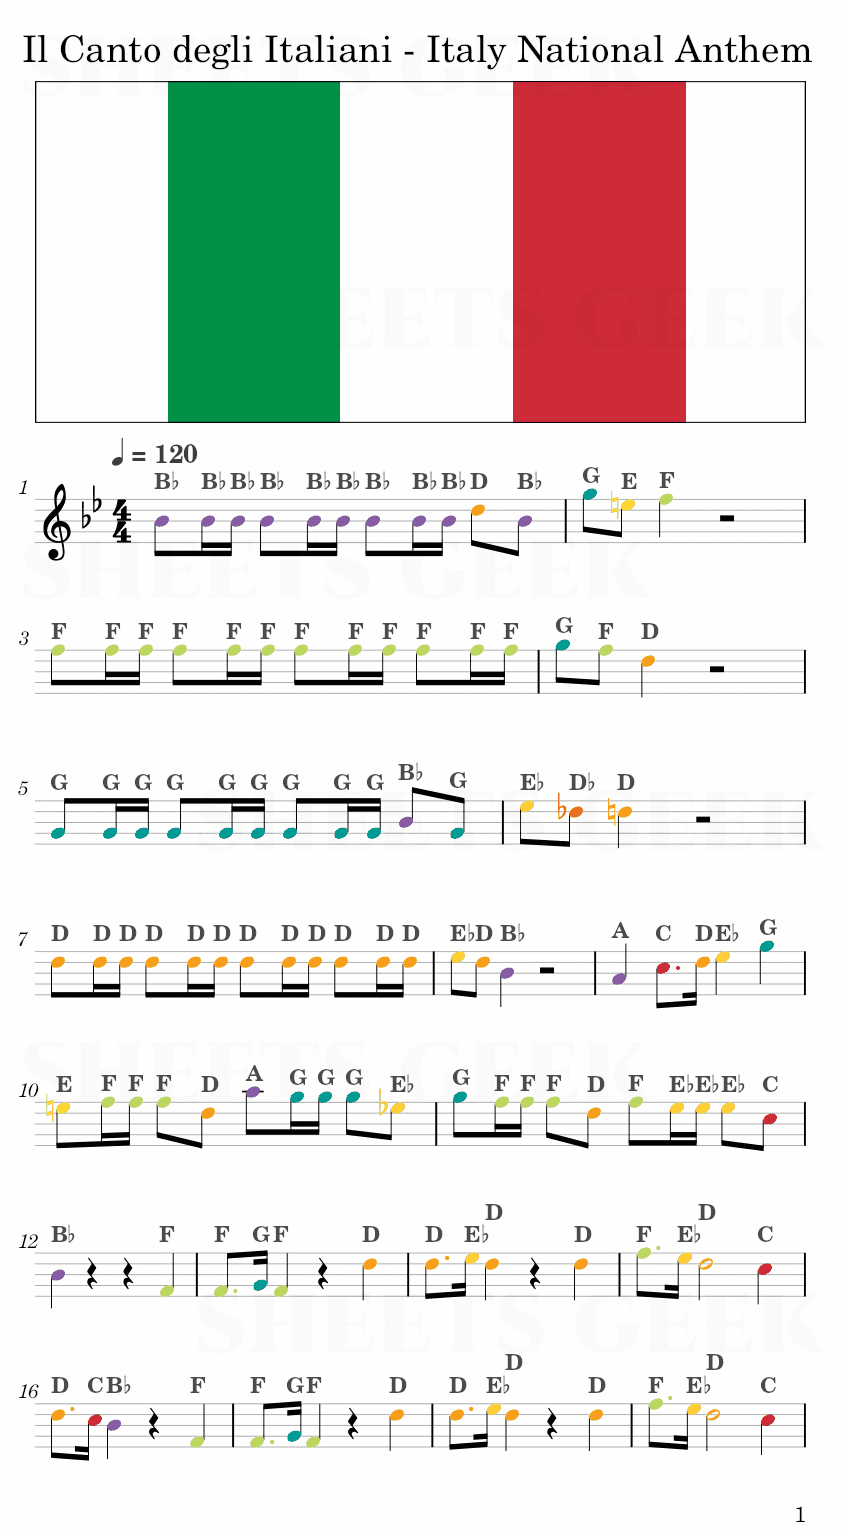 Il Canto degli Italiani - Italy National Anthem Easy Sheet Music Free for piano, keyboard, flute, violin, sax, cello page 1